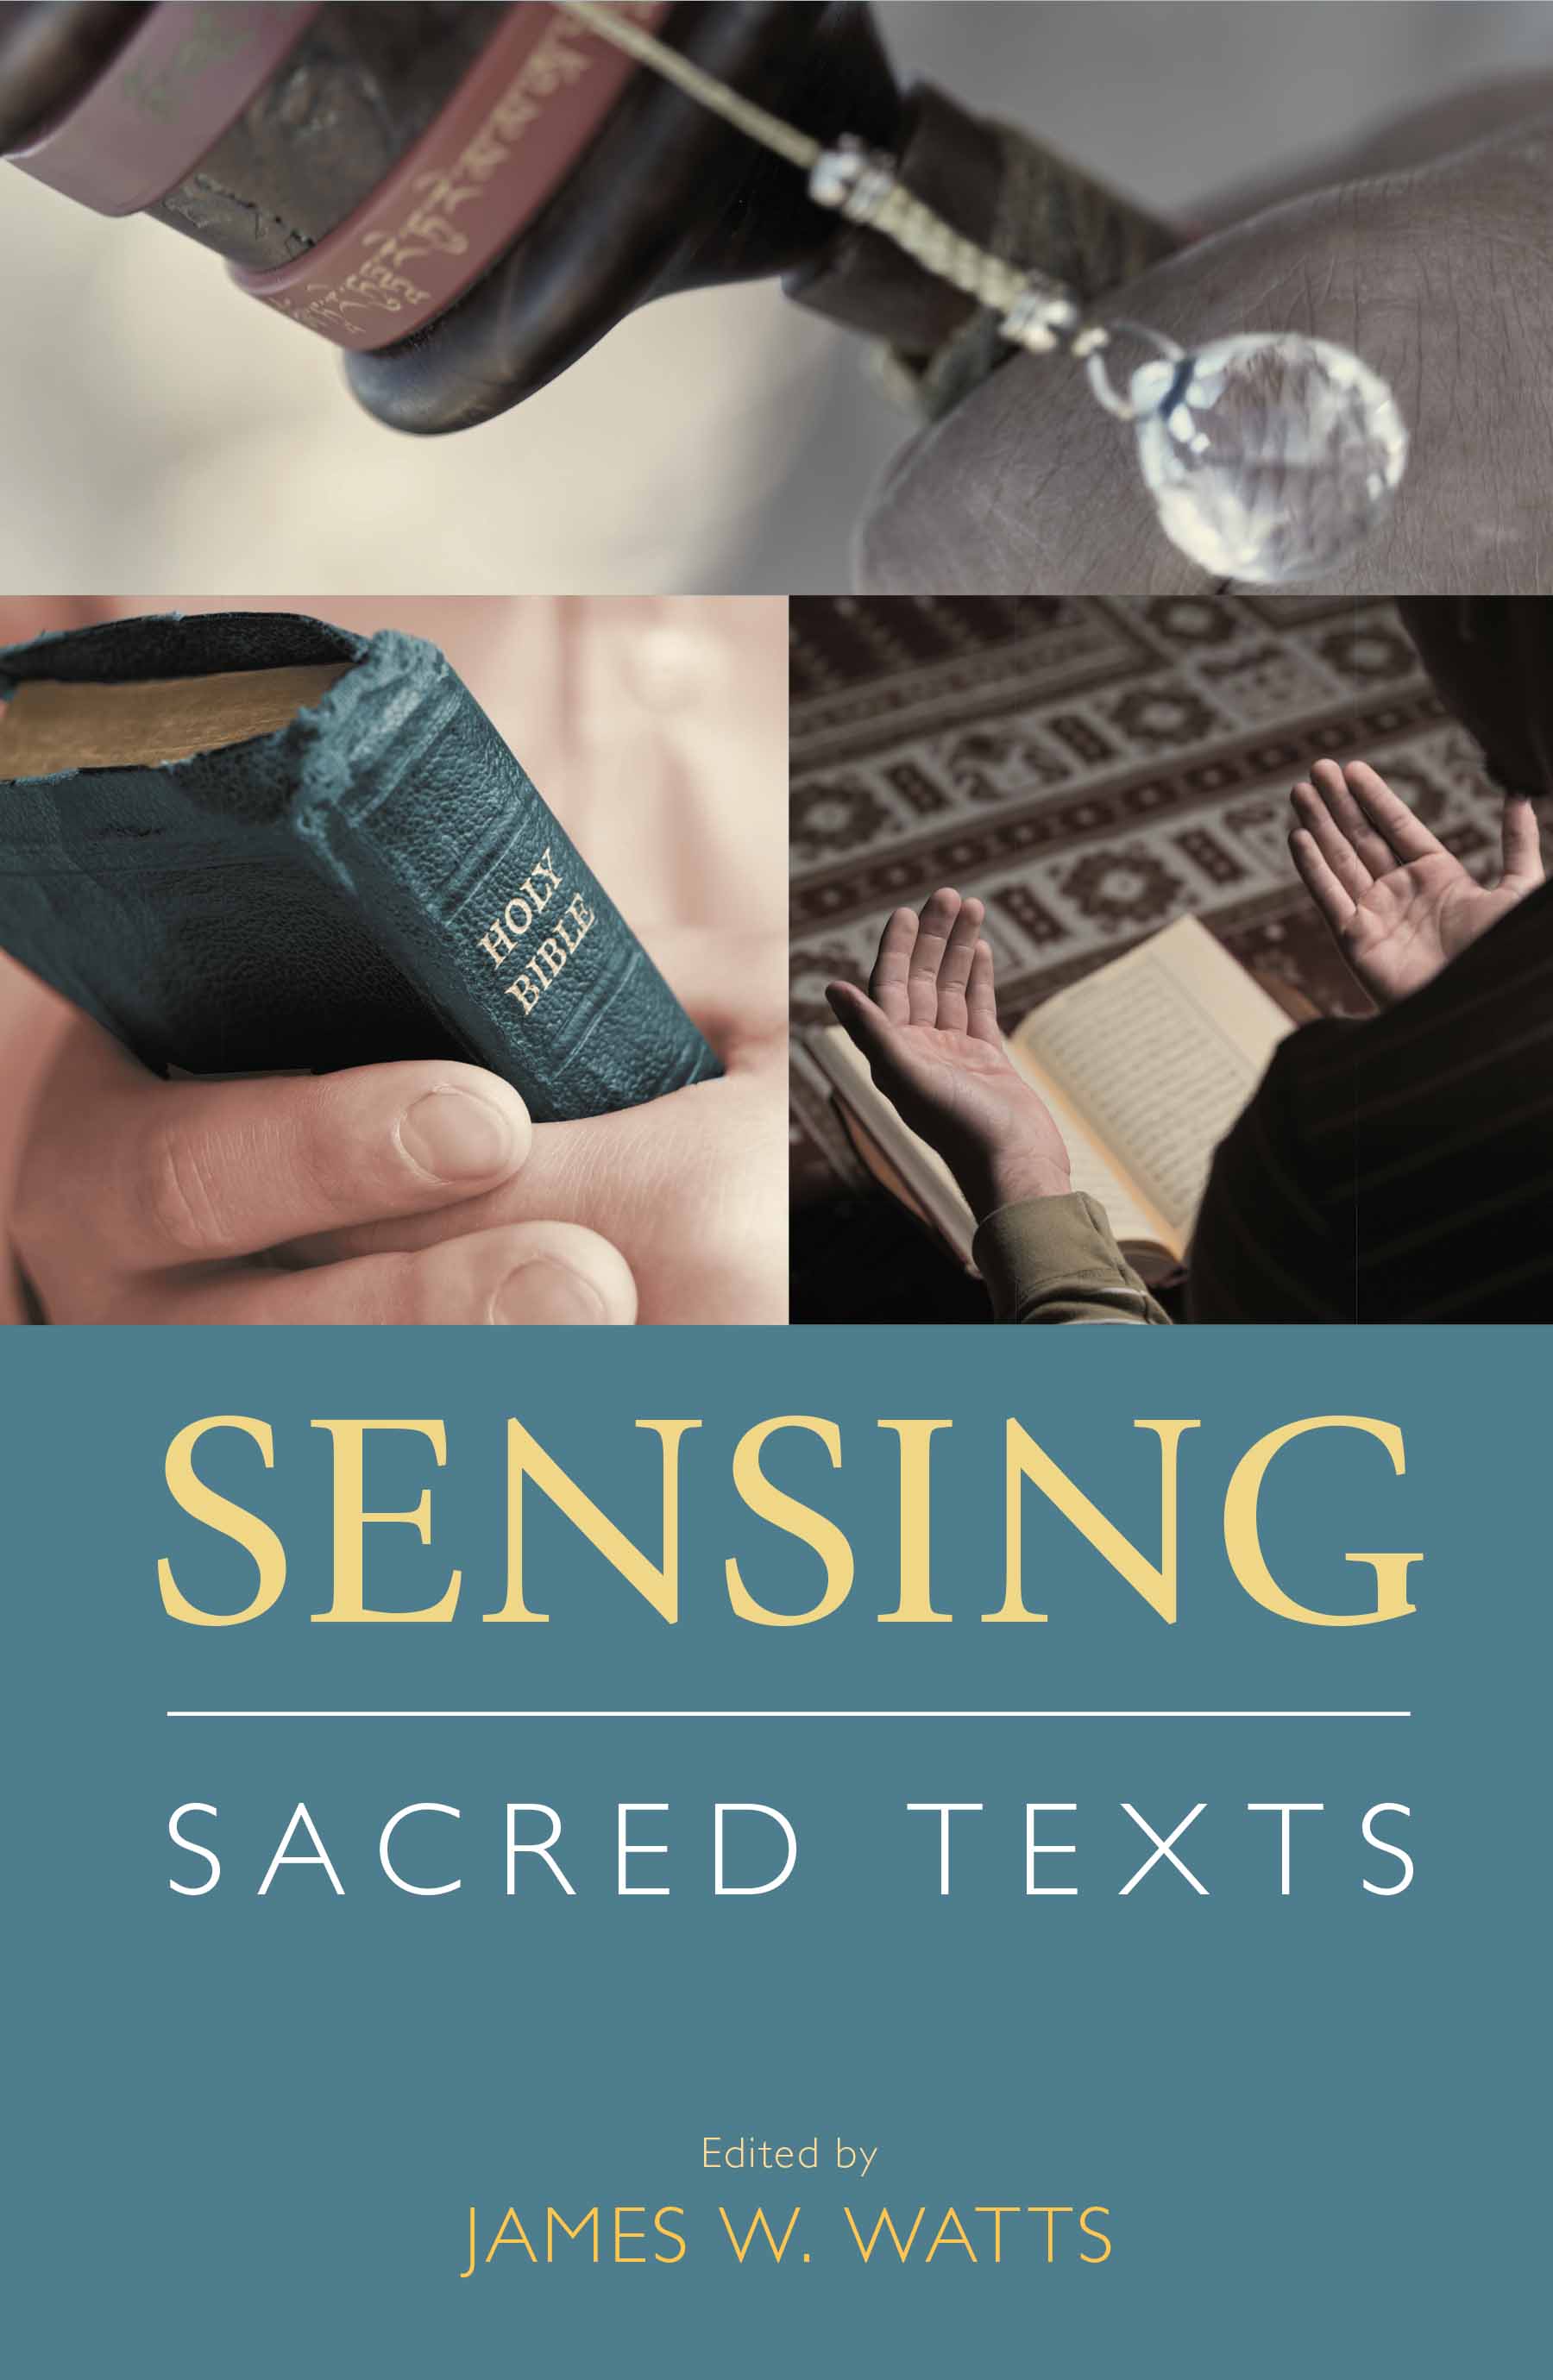 Sensing Sacred Texts 2018